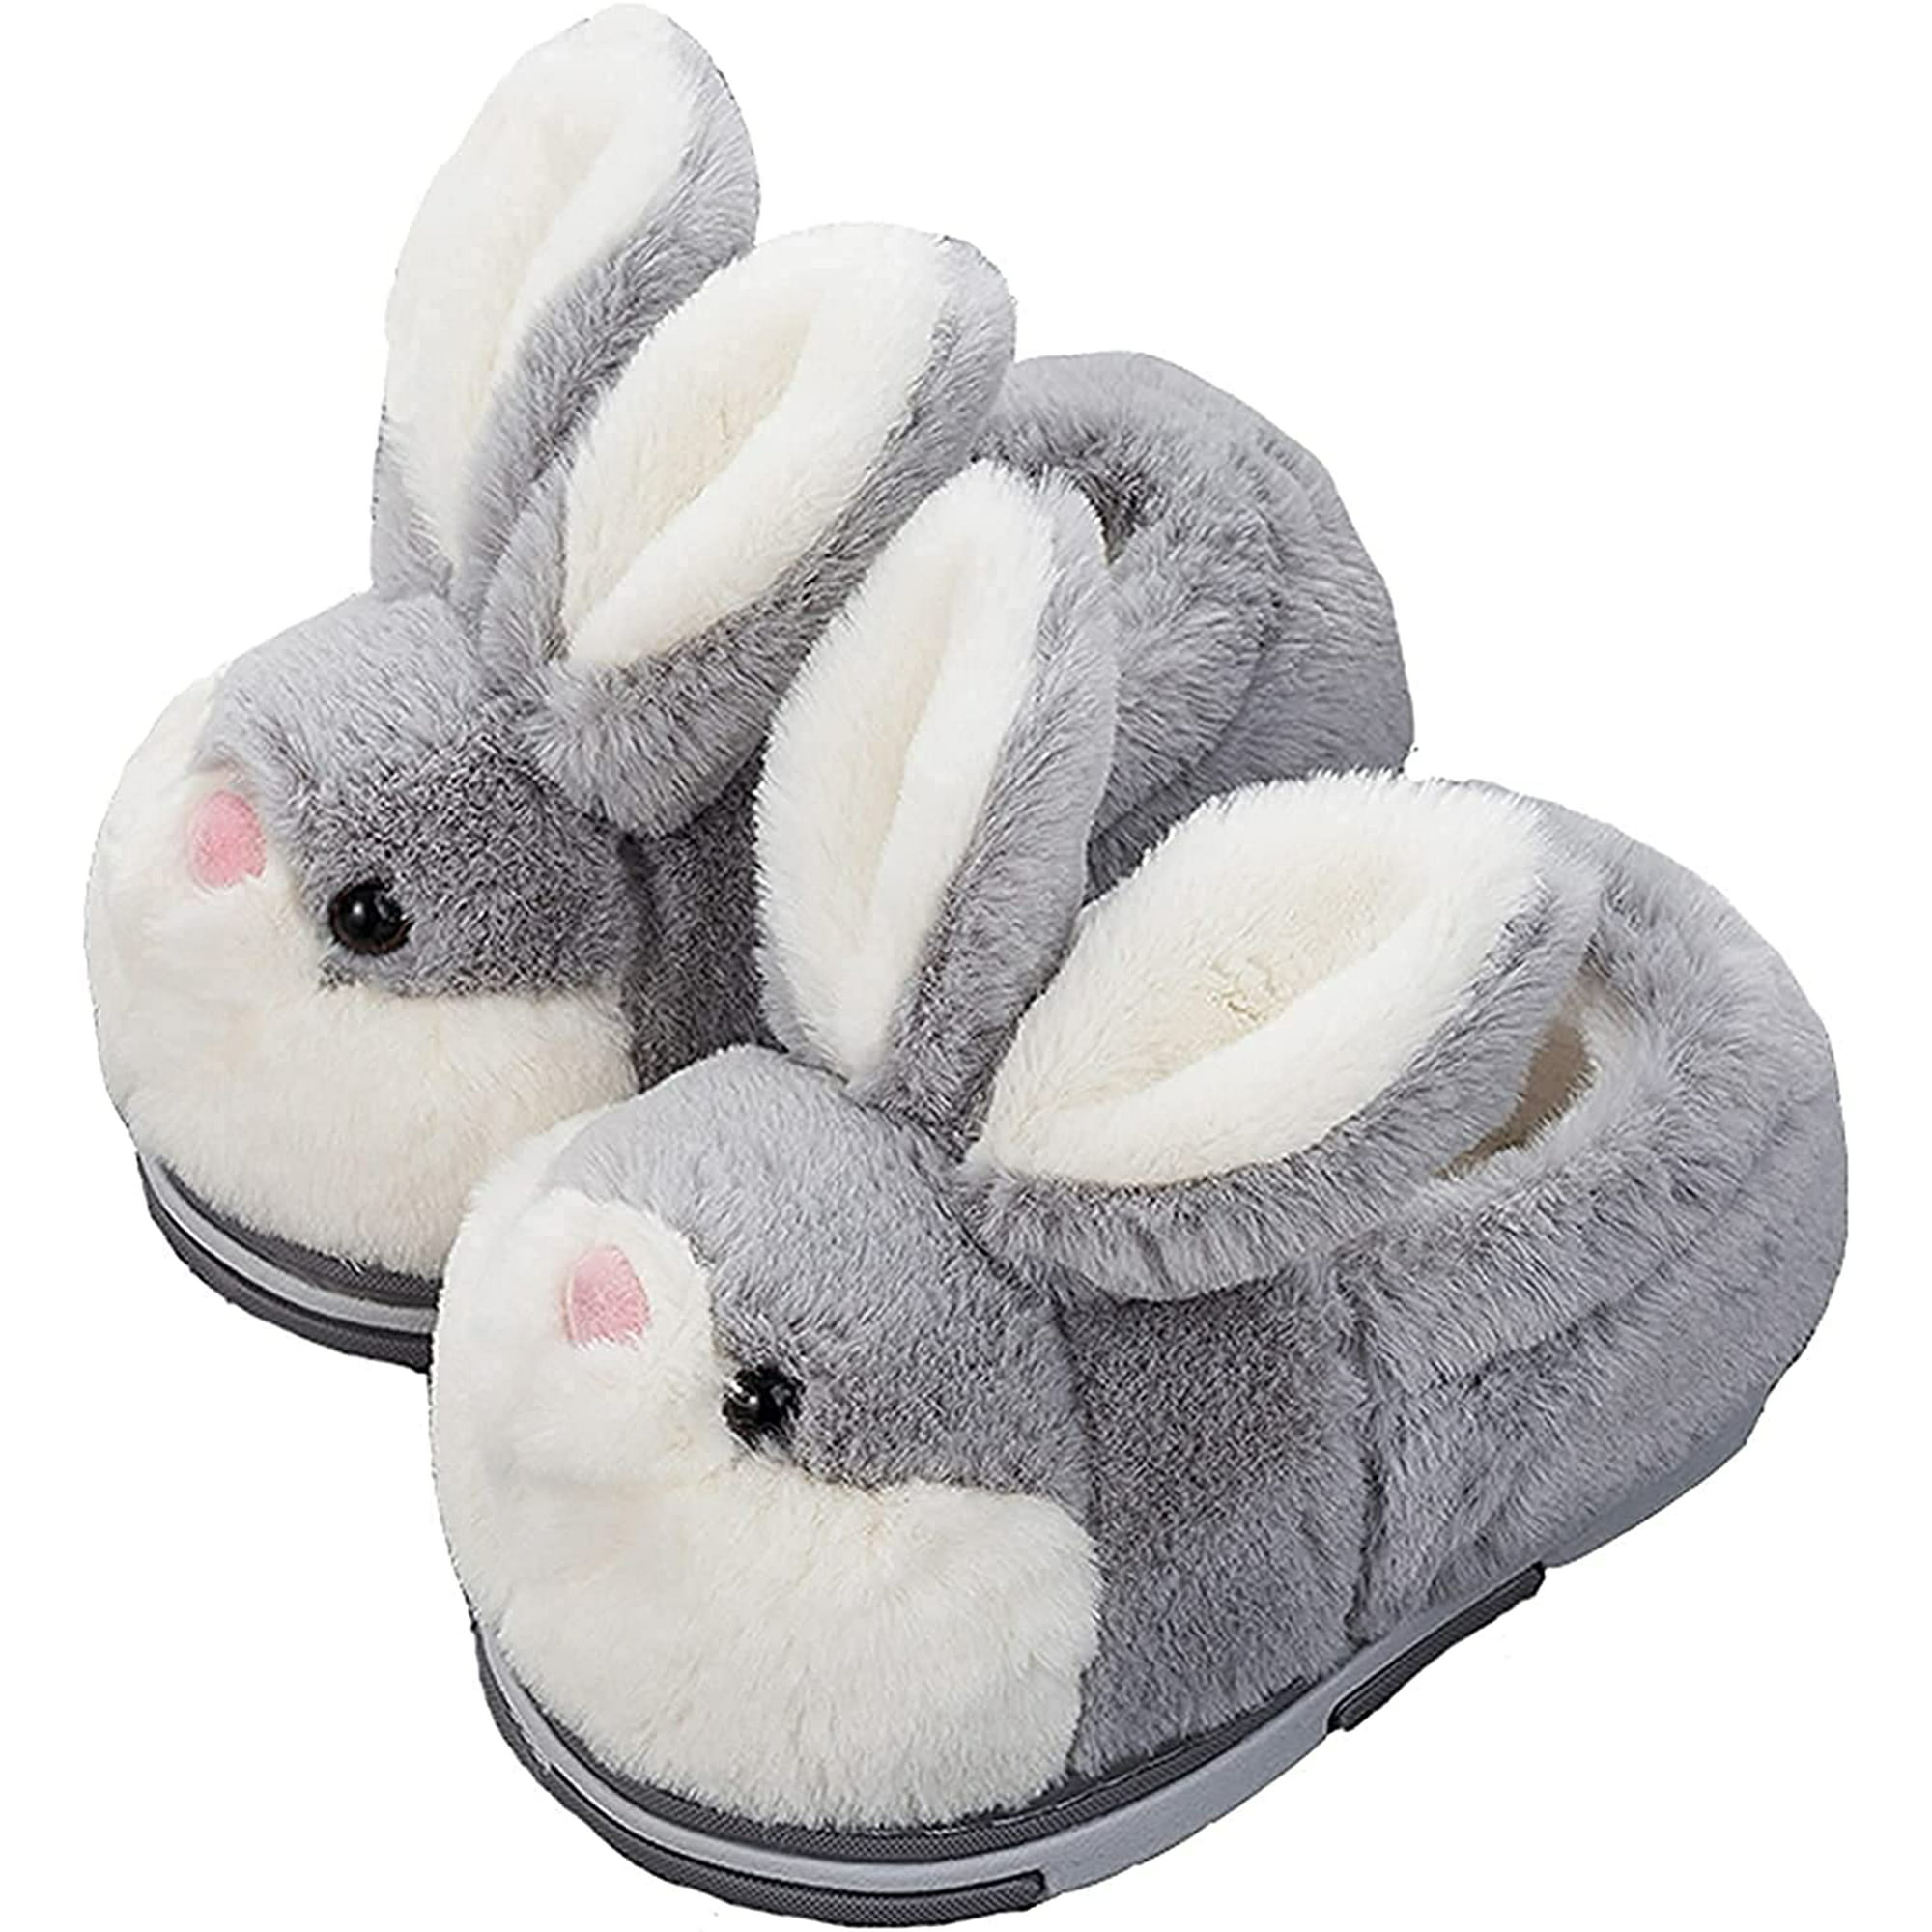 Fuzzy Bunny Slippers for Girls Warm Winter Slippers Home Plush Animal Slippers Pink Slippers - Walmart.com